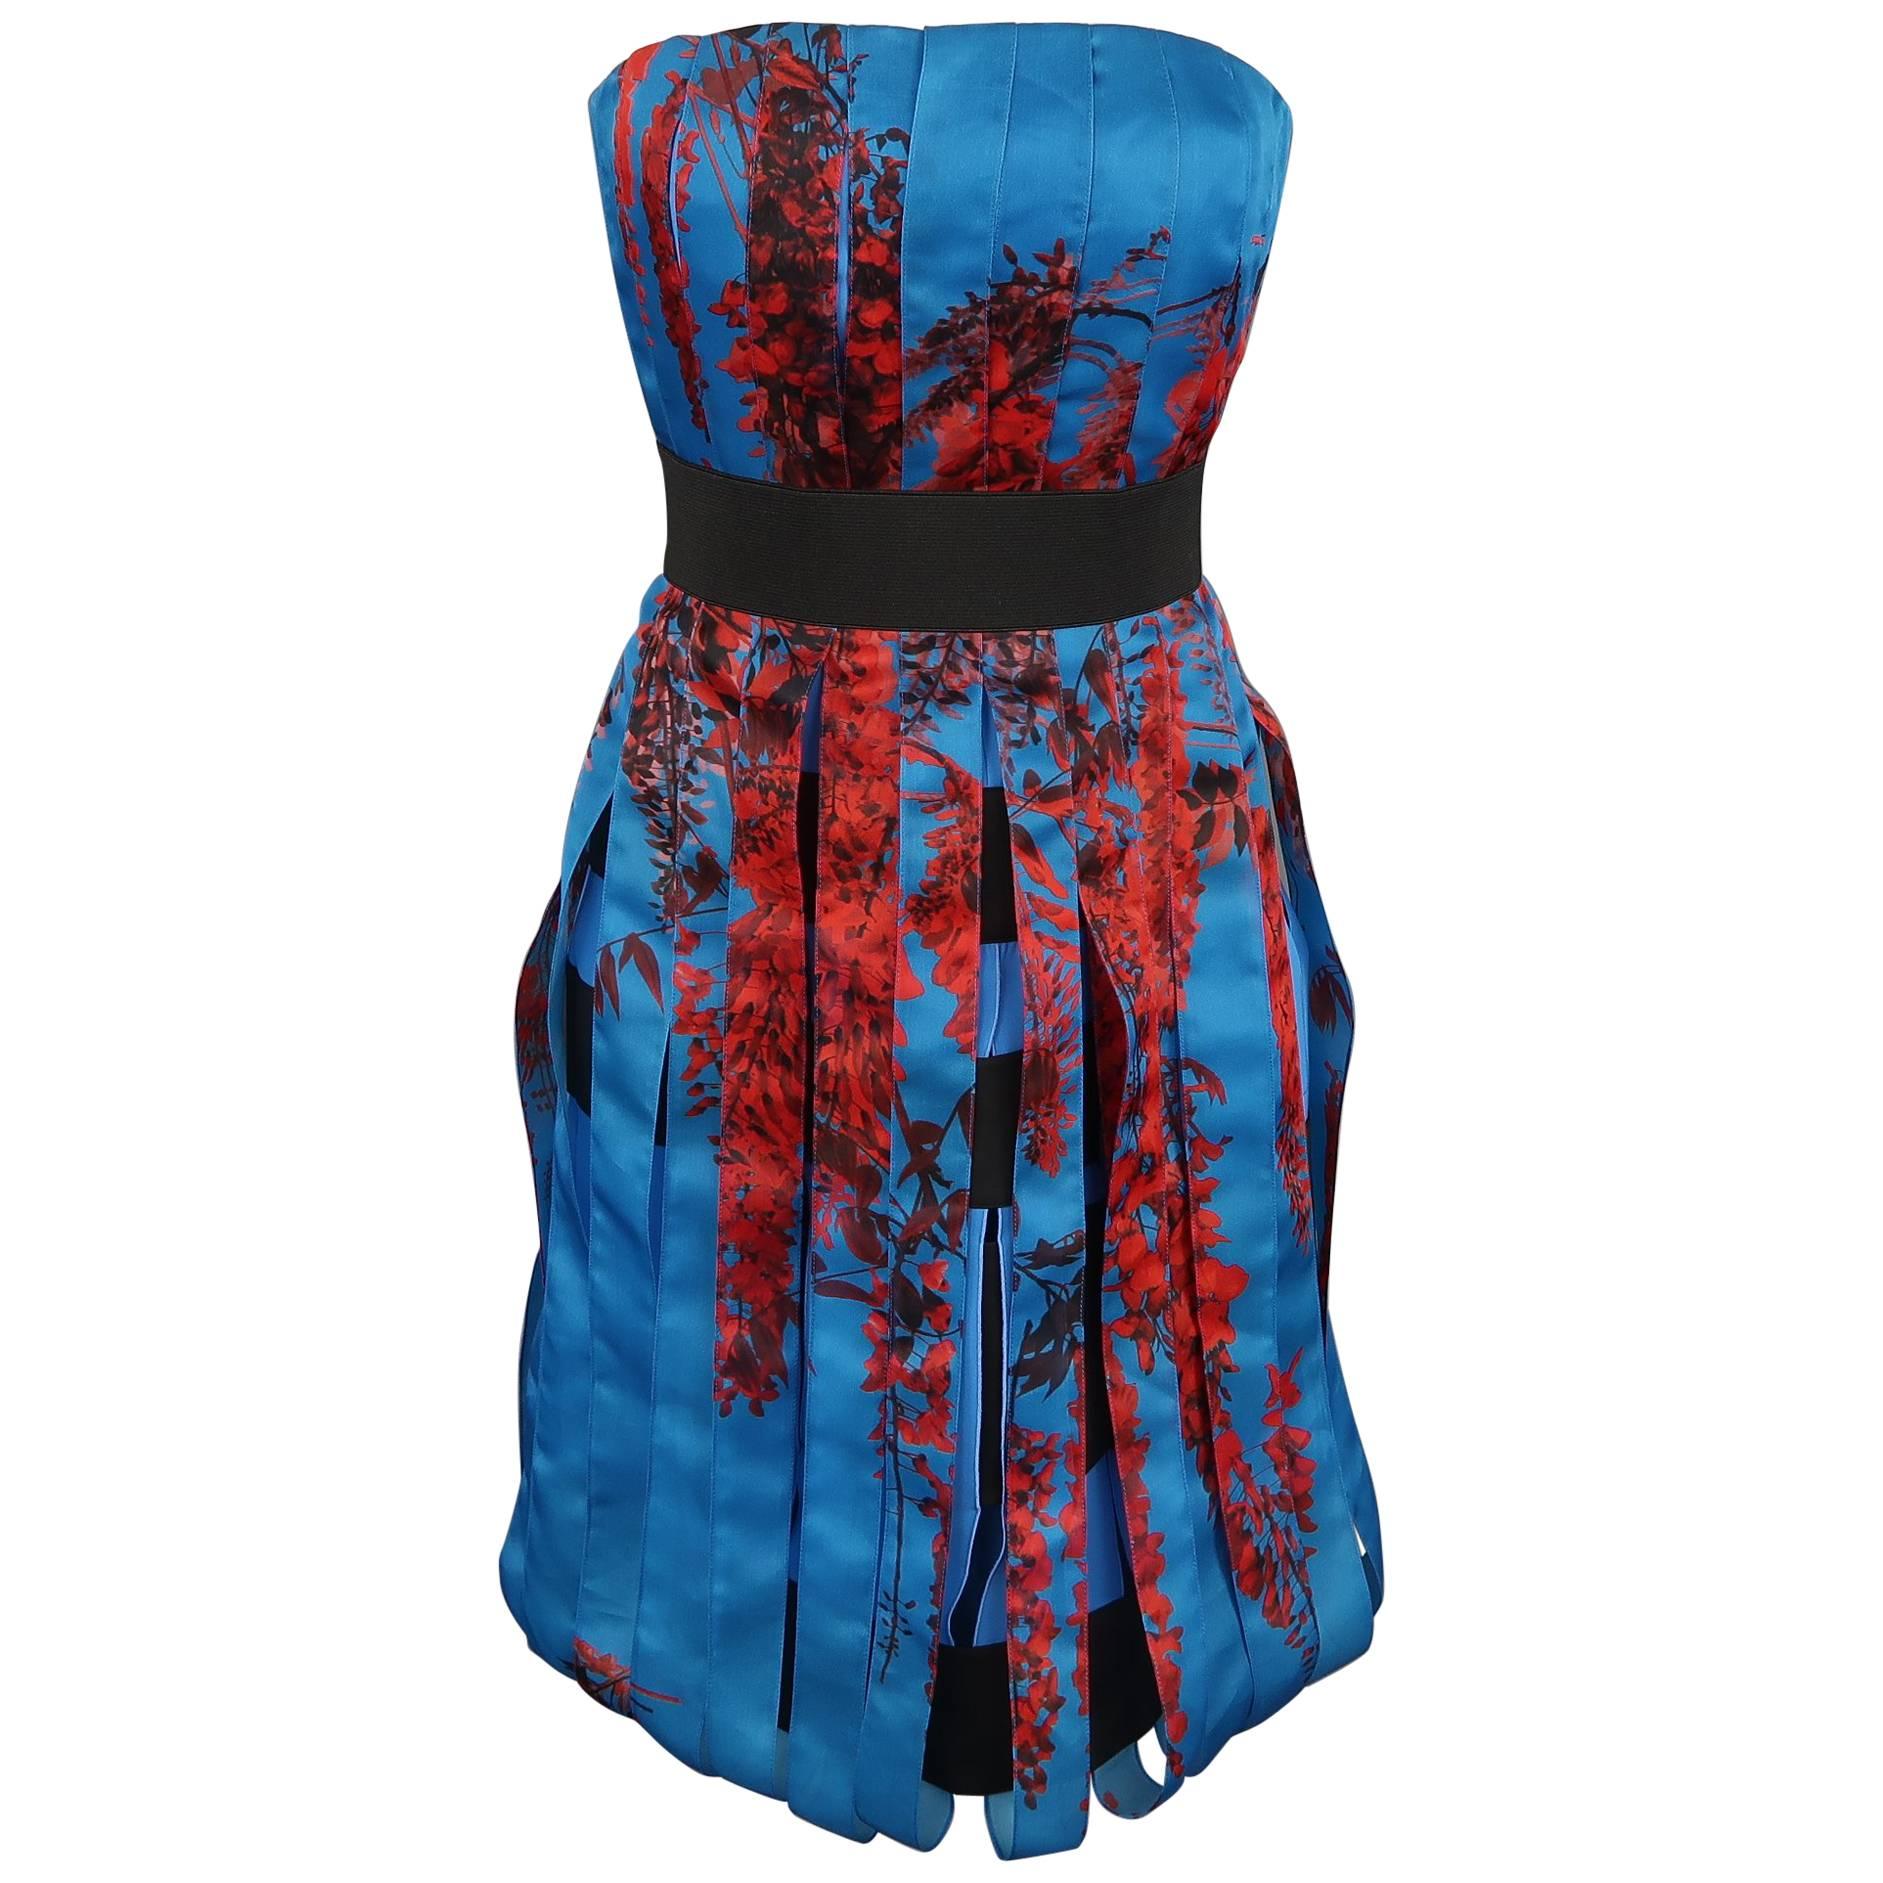 Christian Dior Dress - Spring 2014 Runway - Blue, Red, Floral, Silk, Cocktail